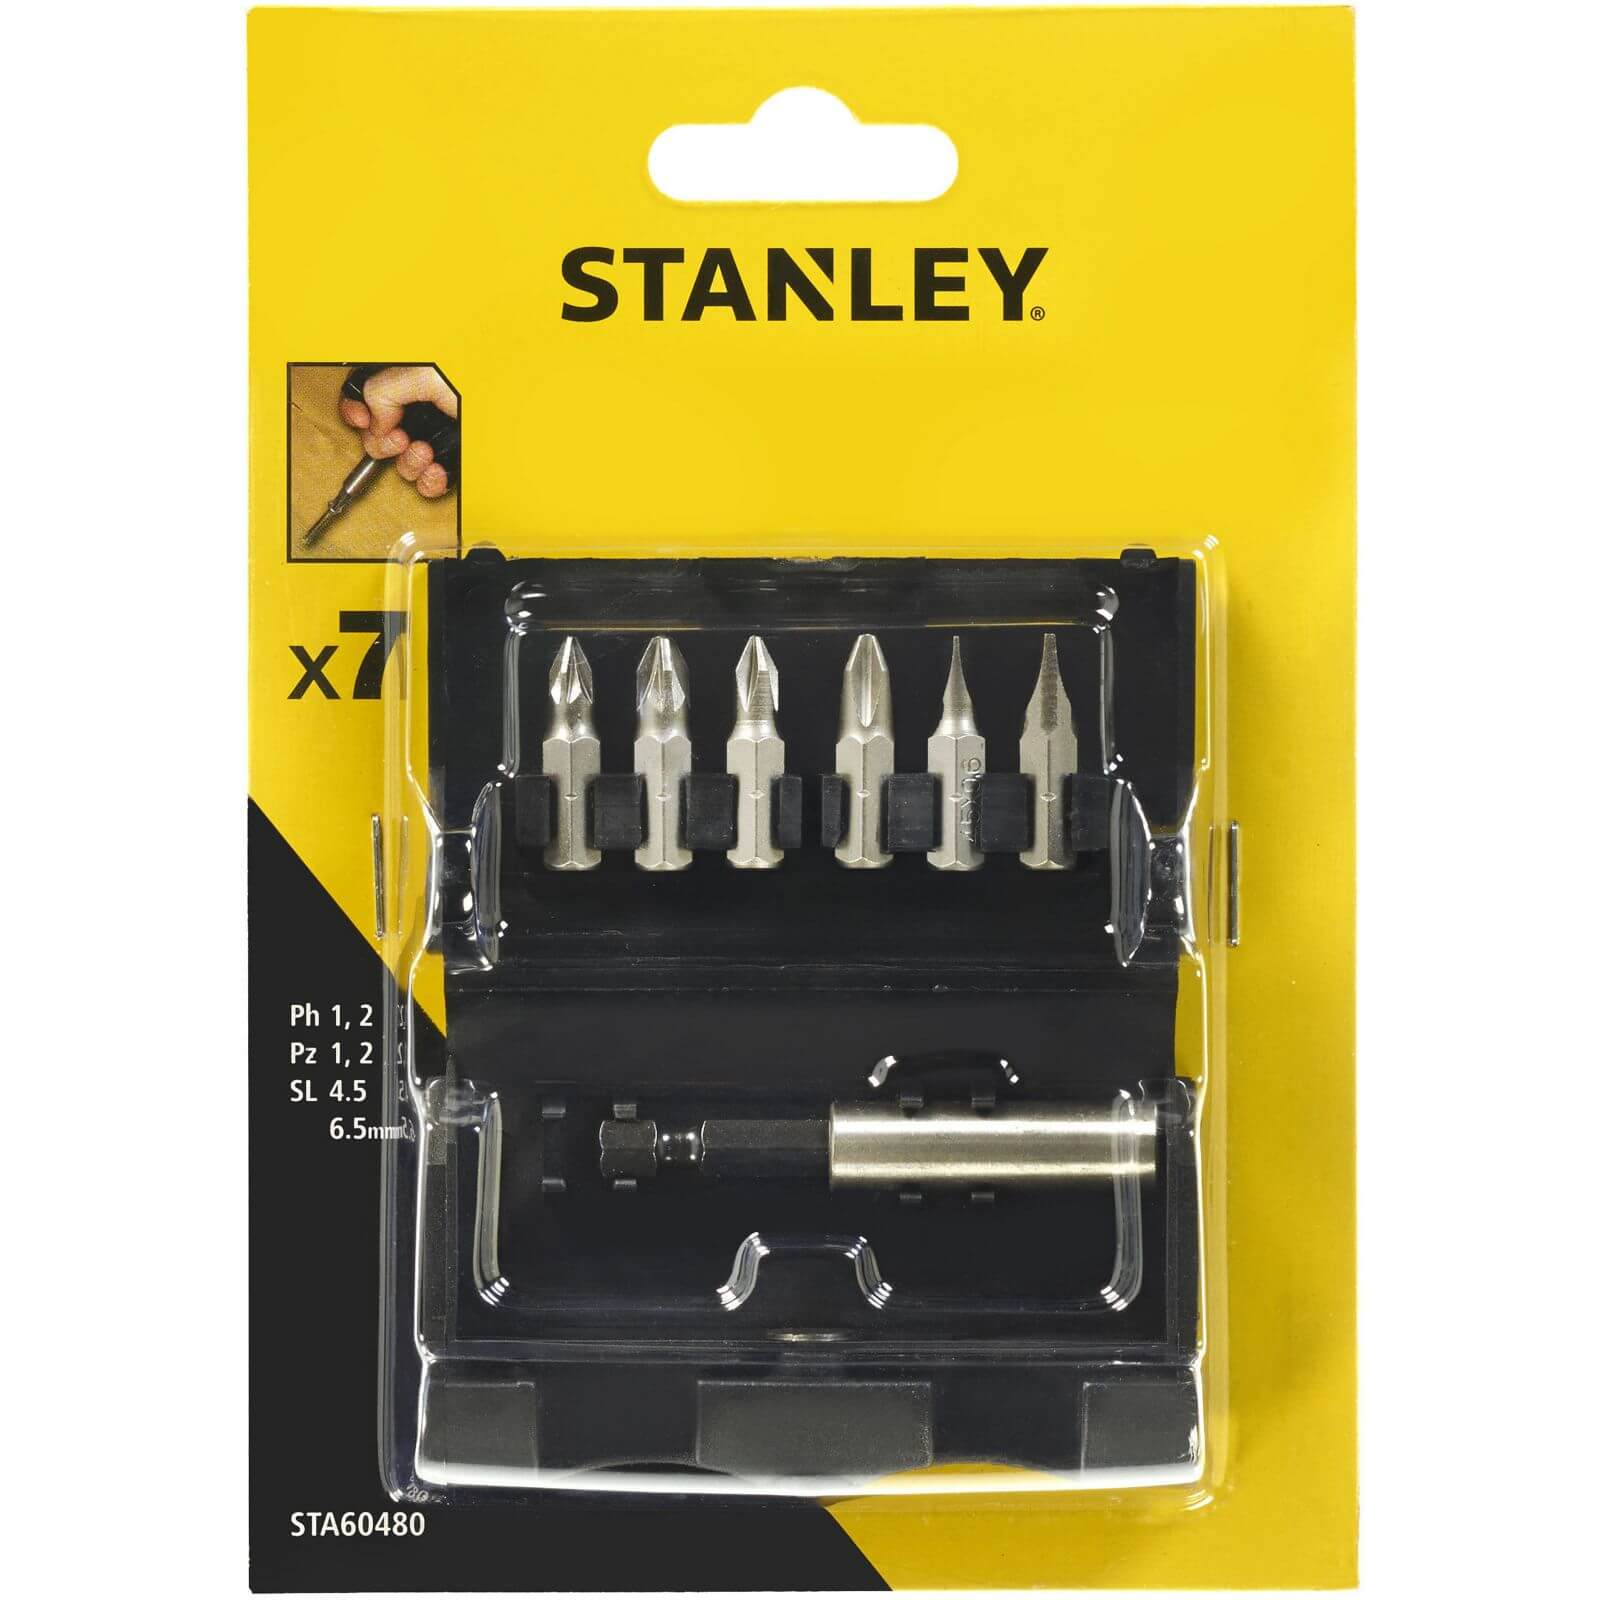 Photo of Stanley 6pc Screwdriver Bit Set + Handle - Sta60480-xj